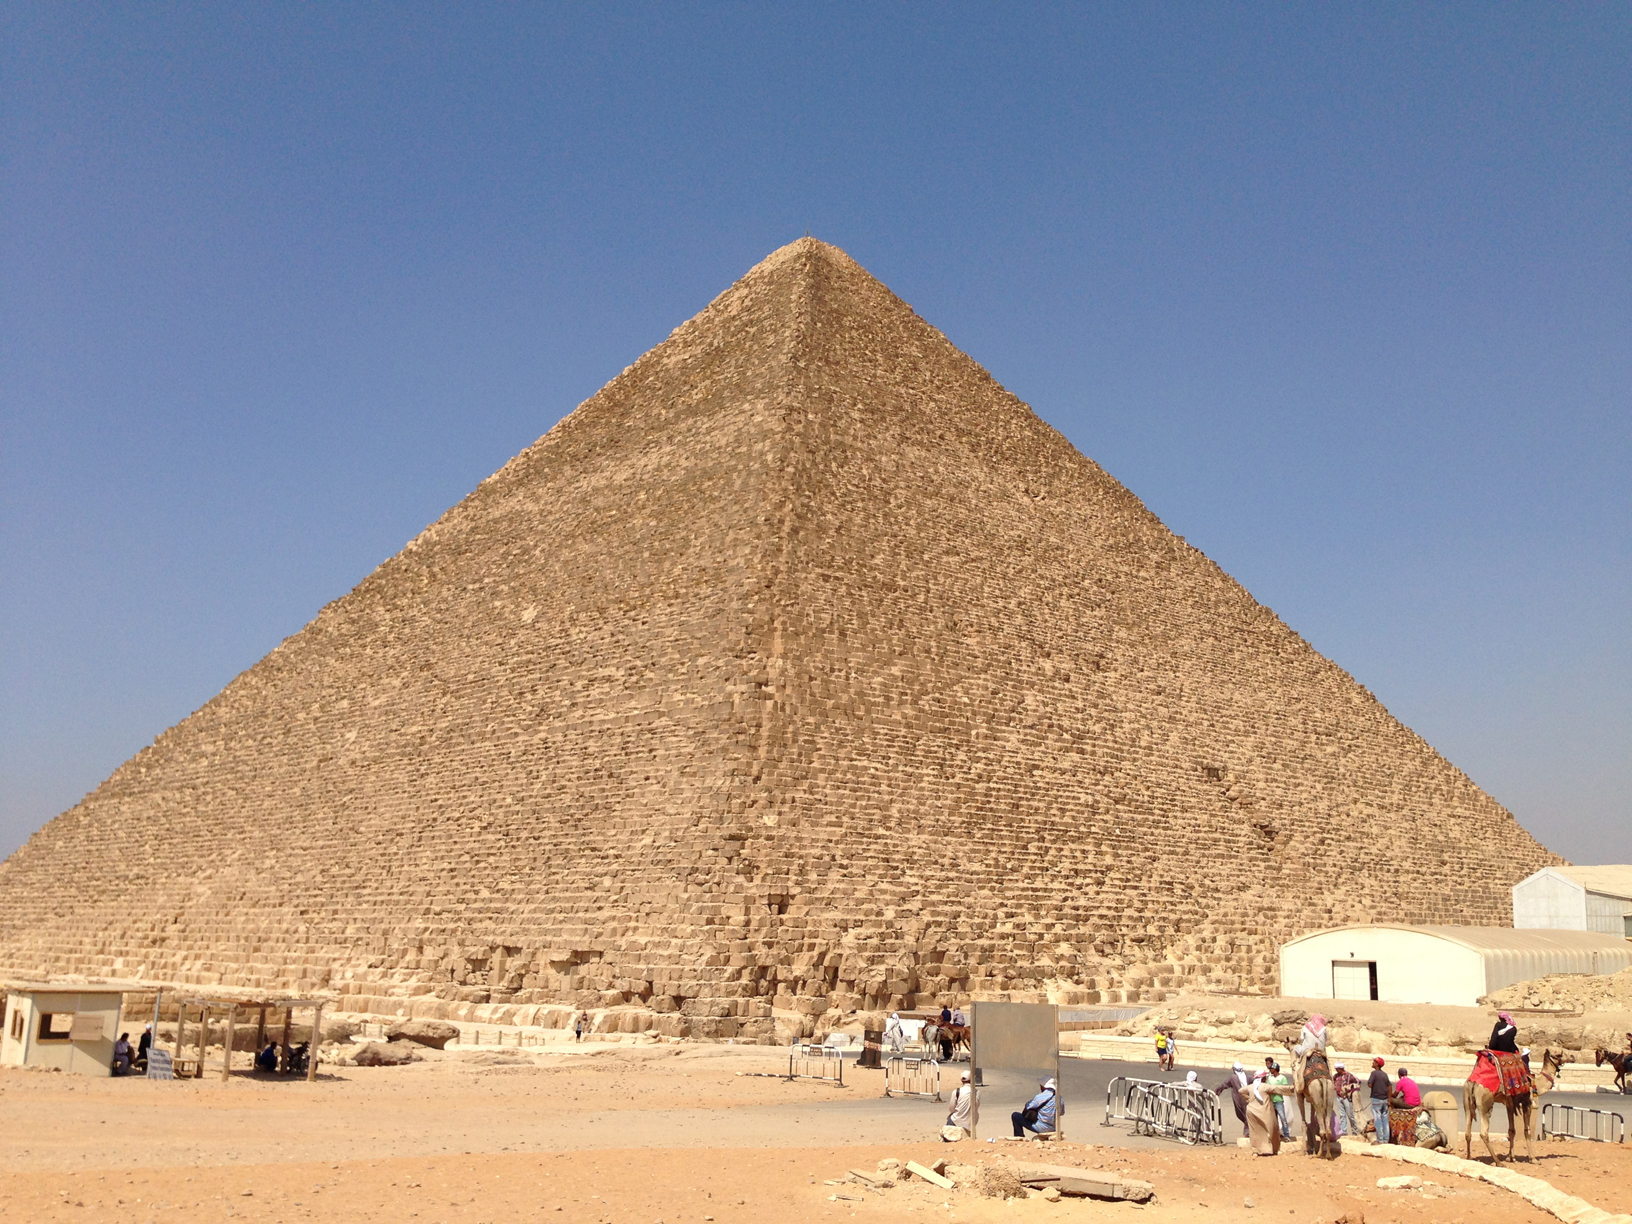 
The Great Pyramid, Giza